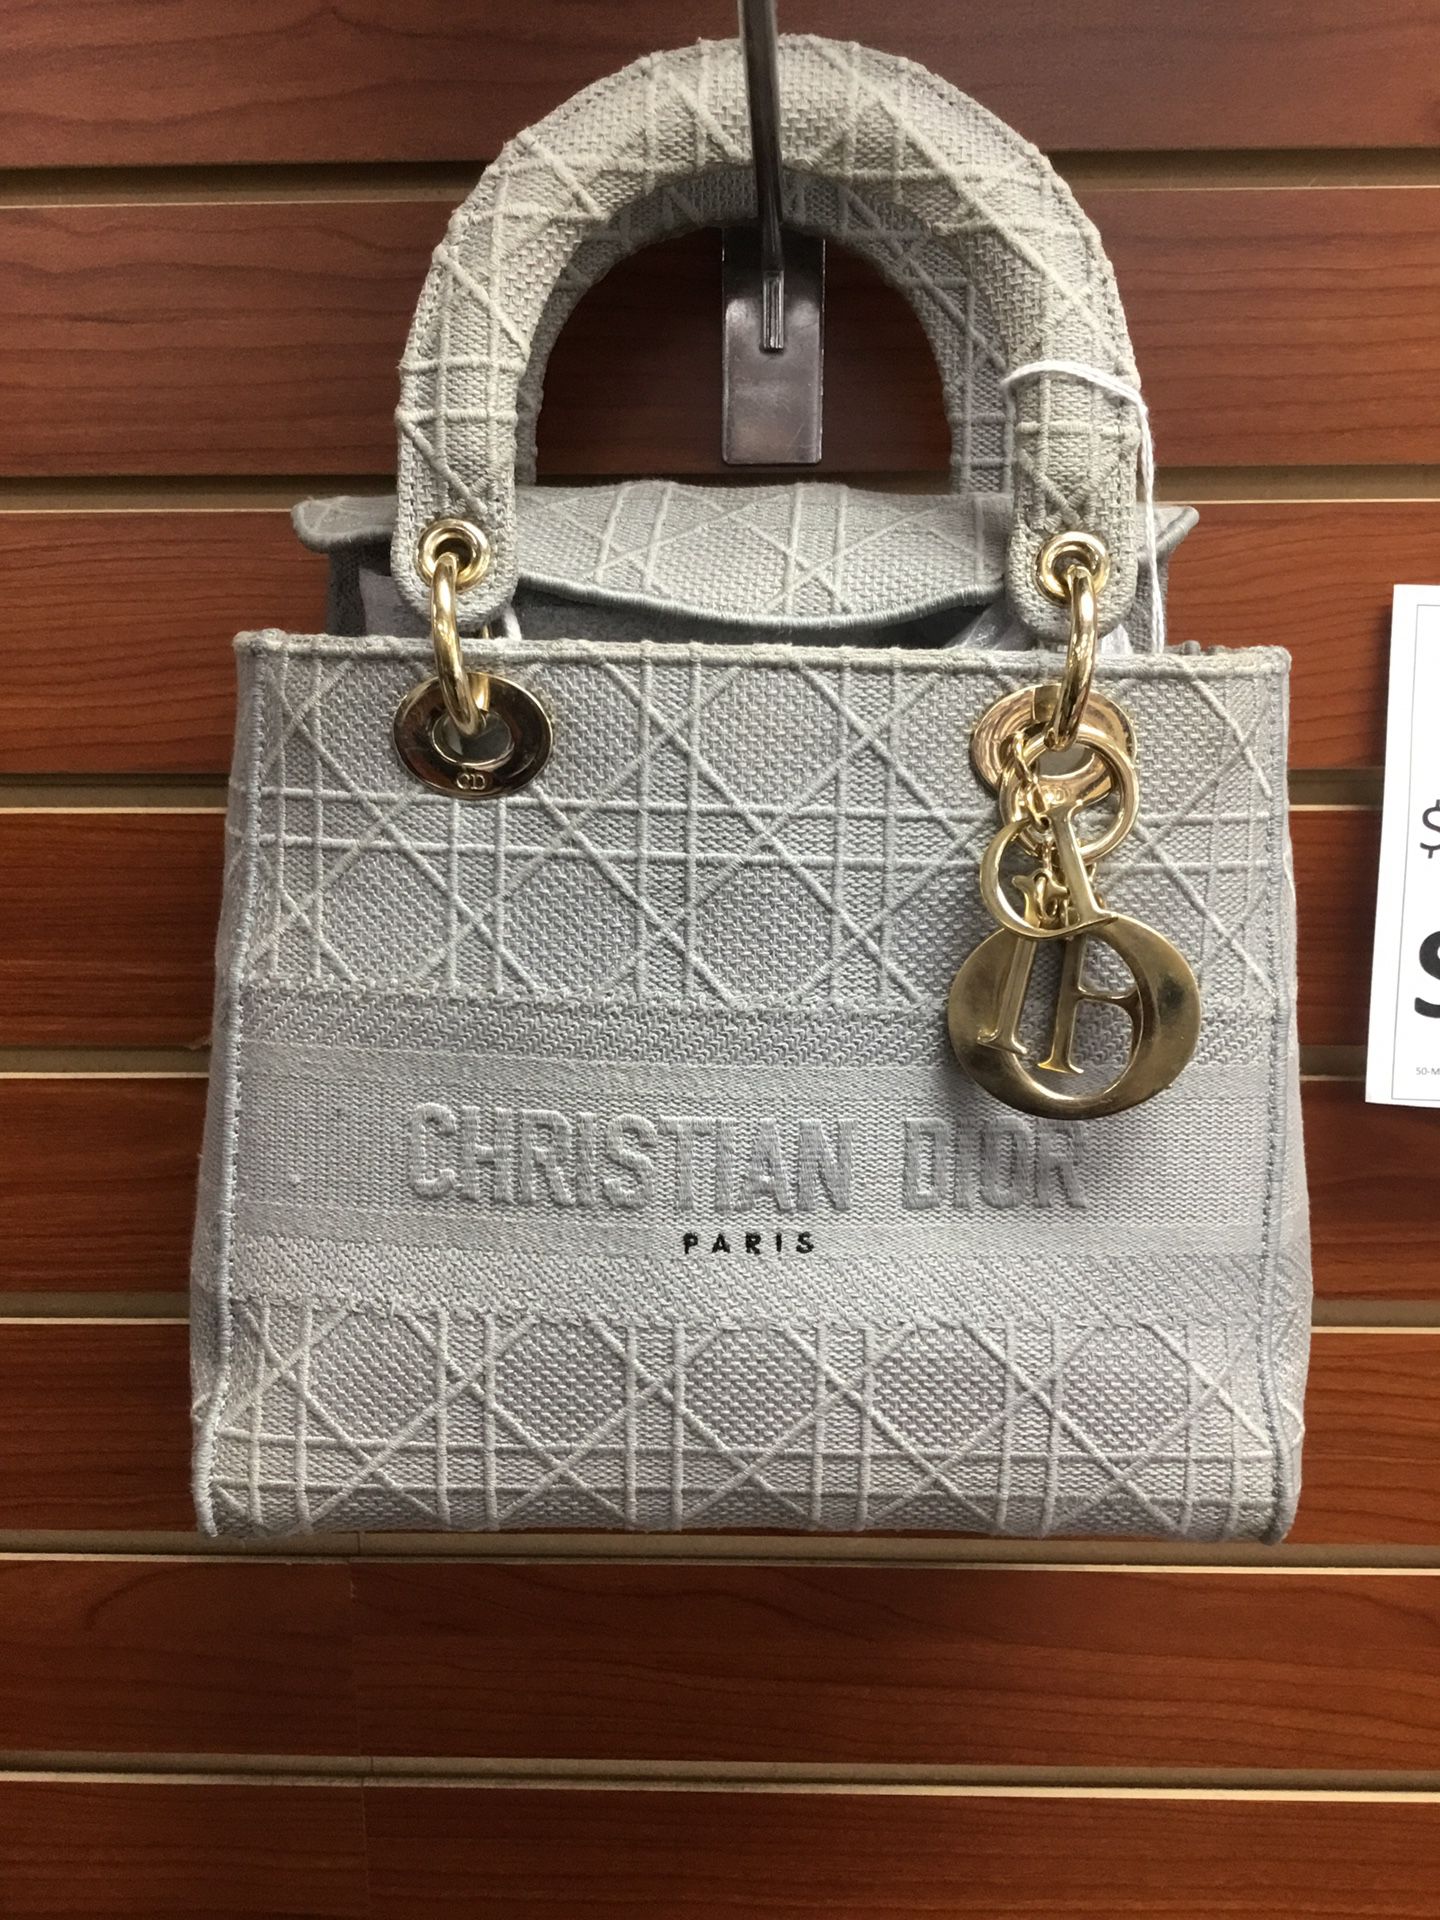 Christian Dior Bag